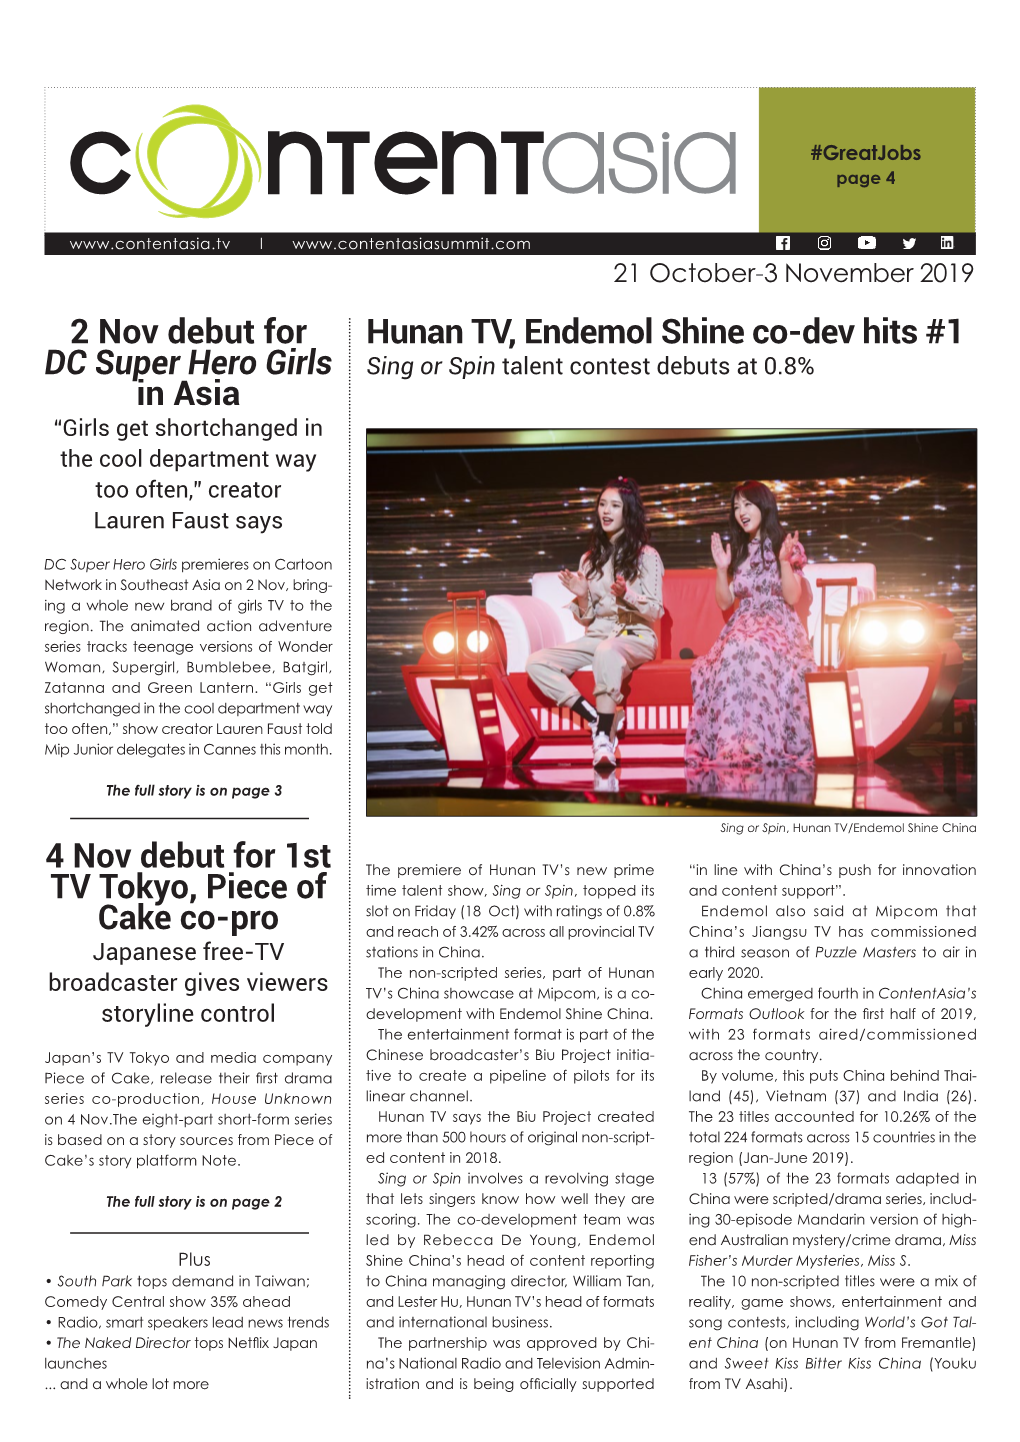 Hunan TV, Endemol Shine Co-Dev Hits #1